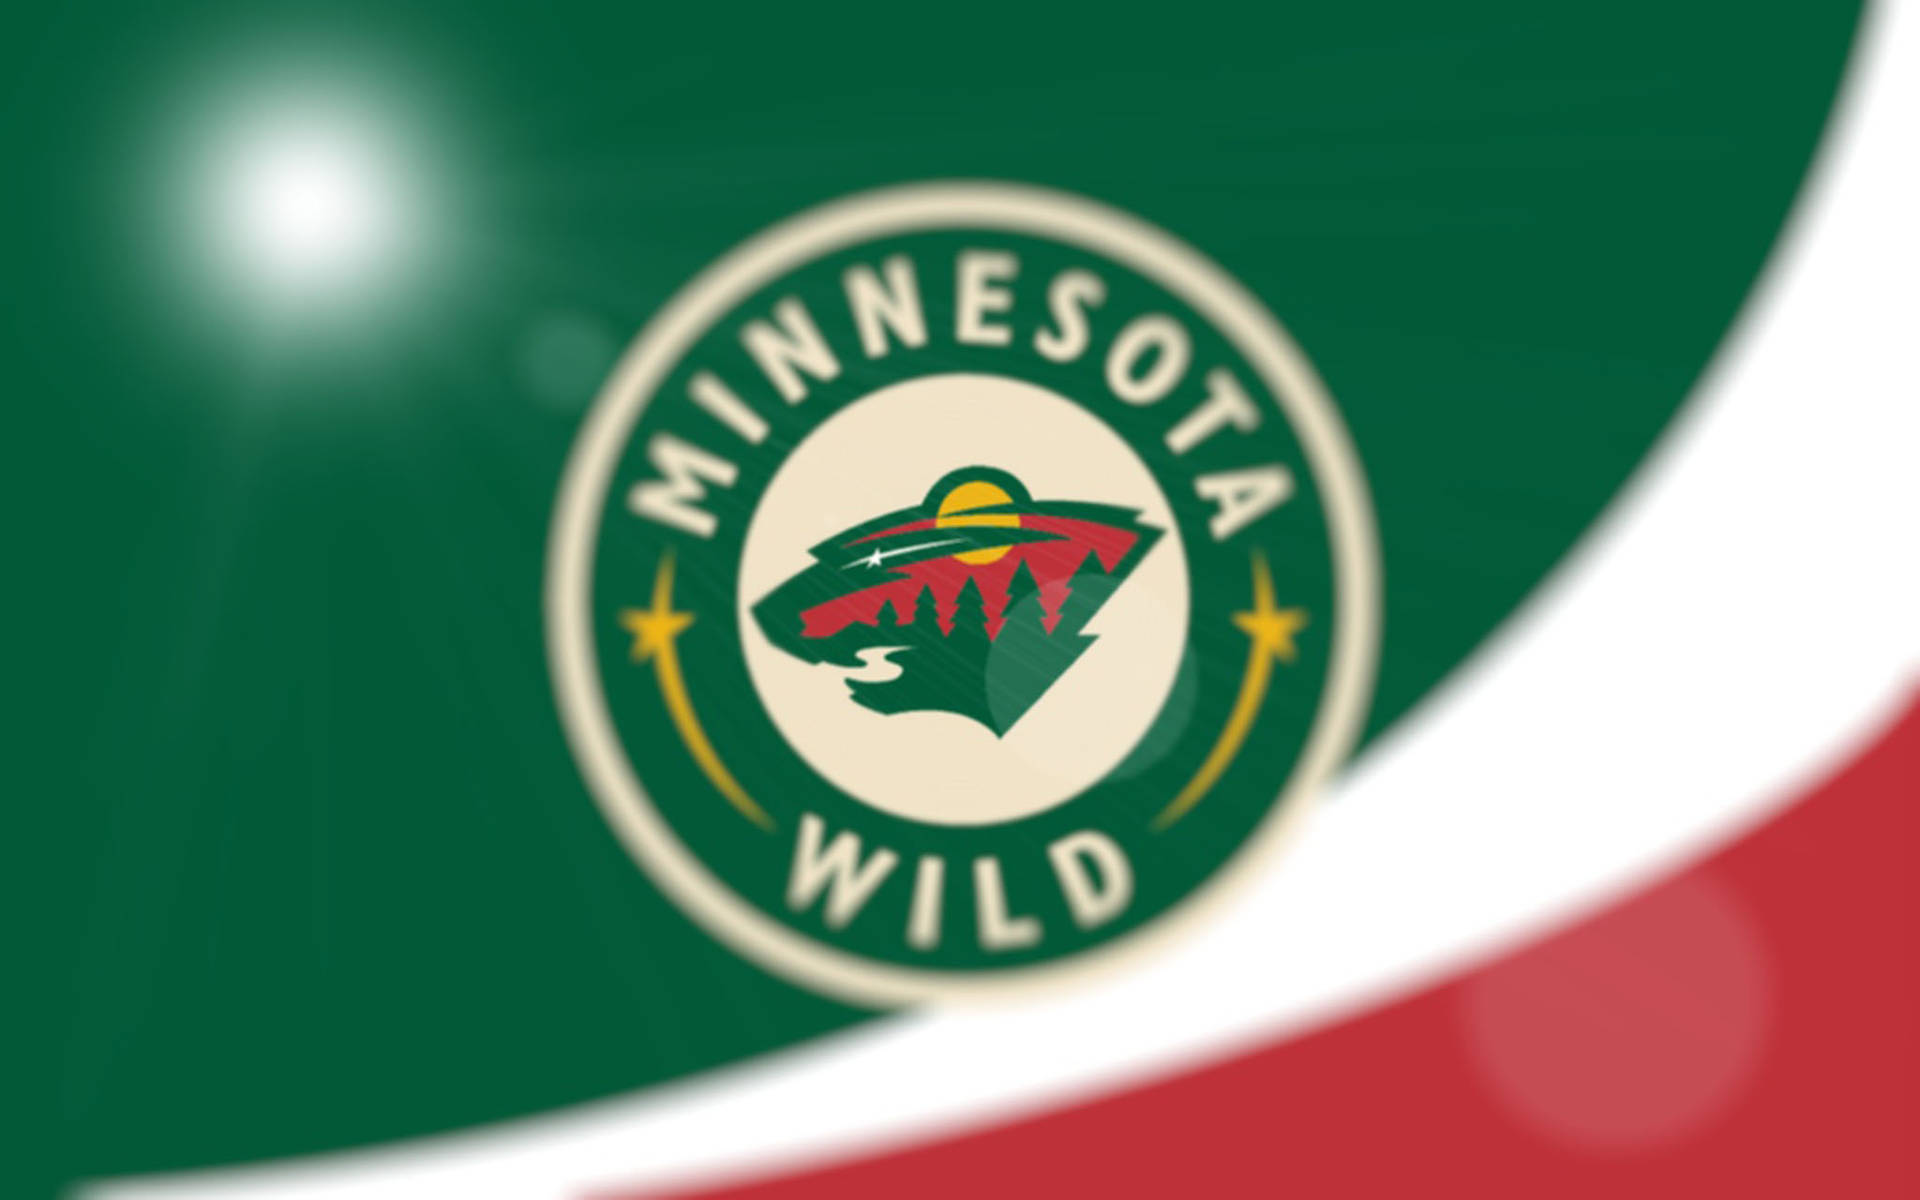 Fondods De Minnesota Wild